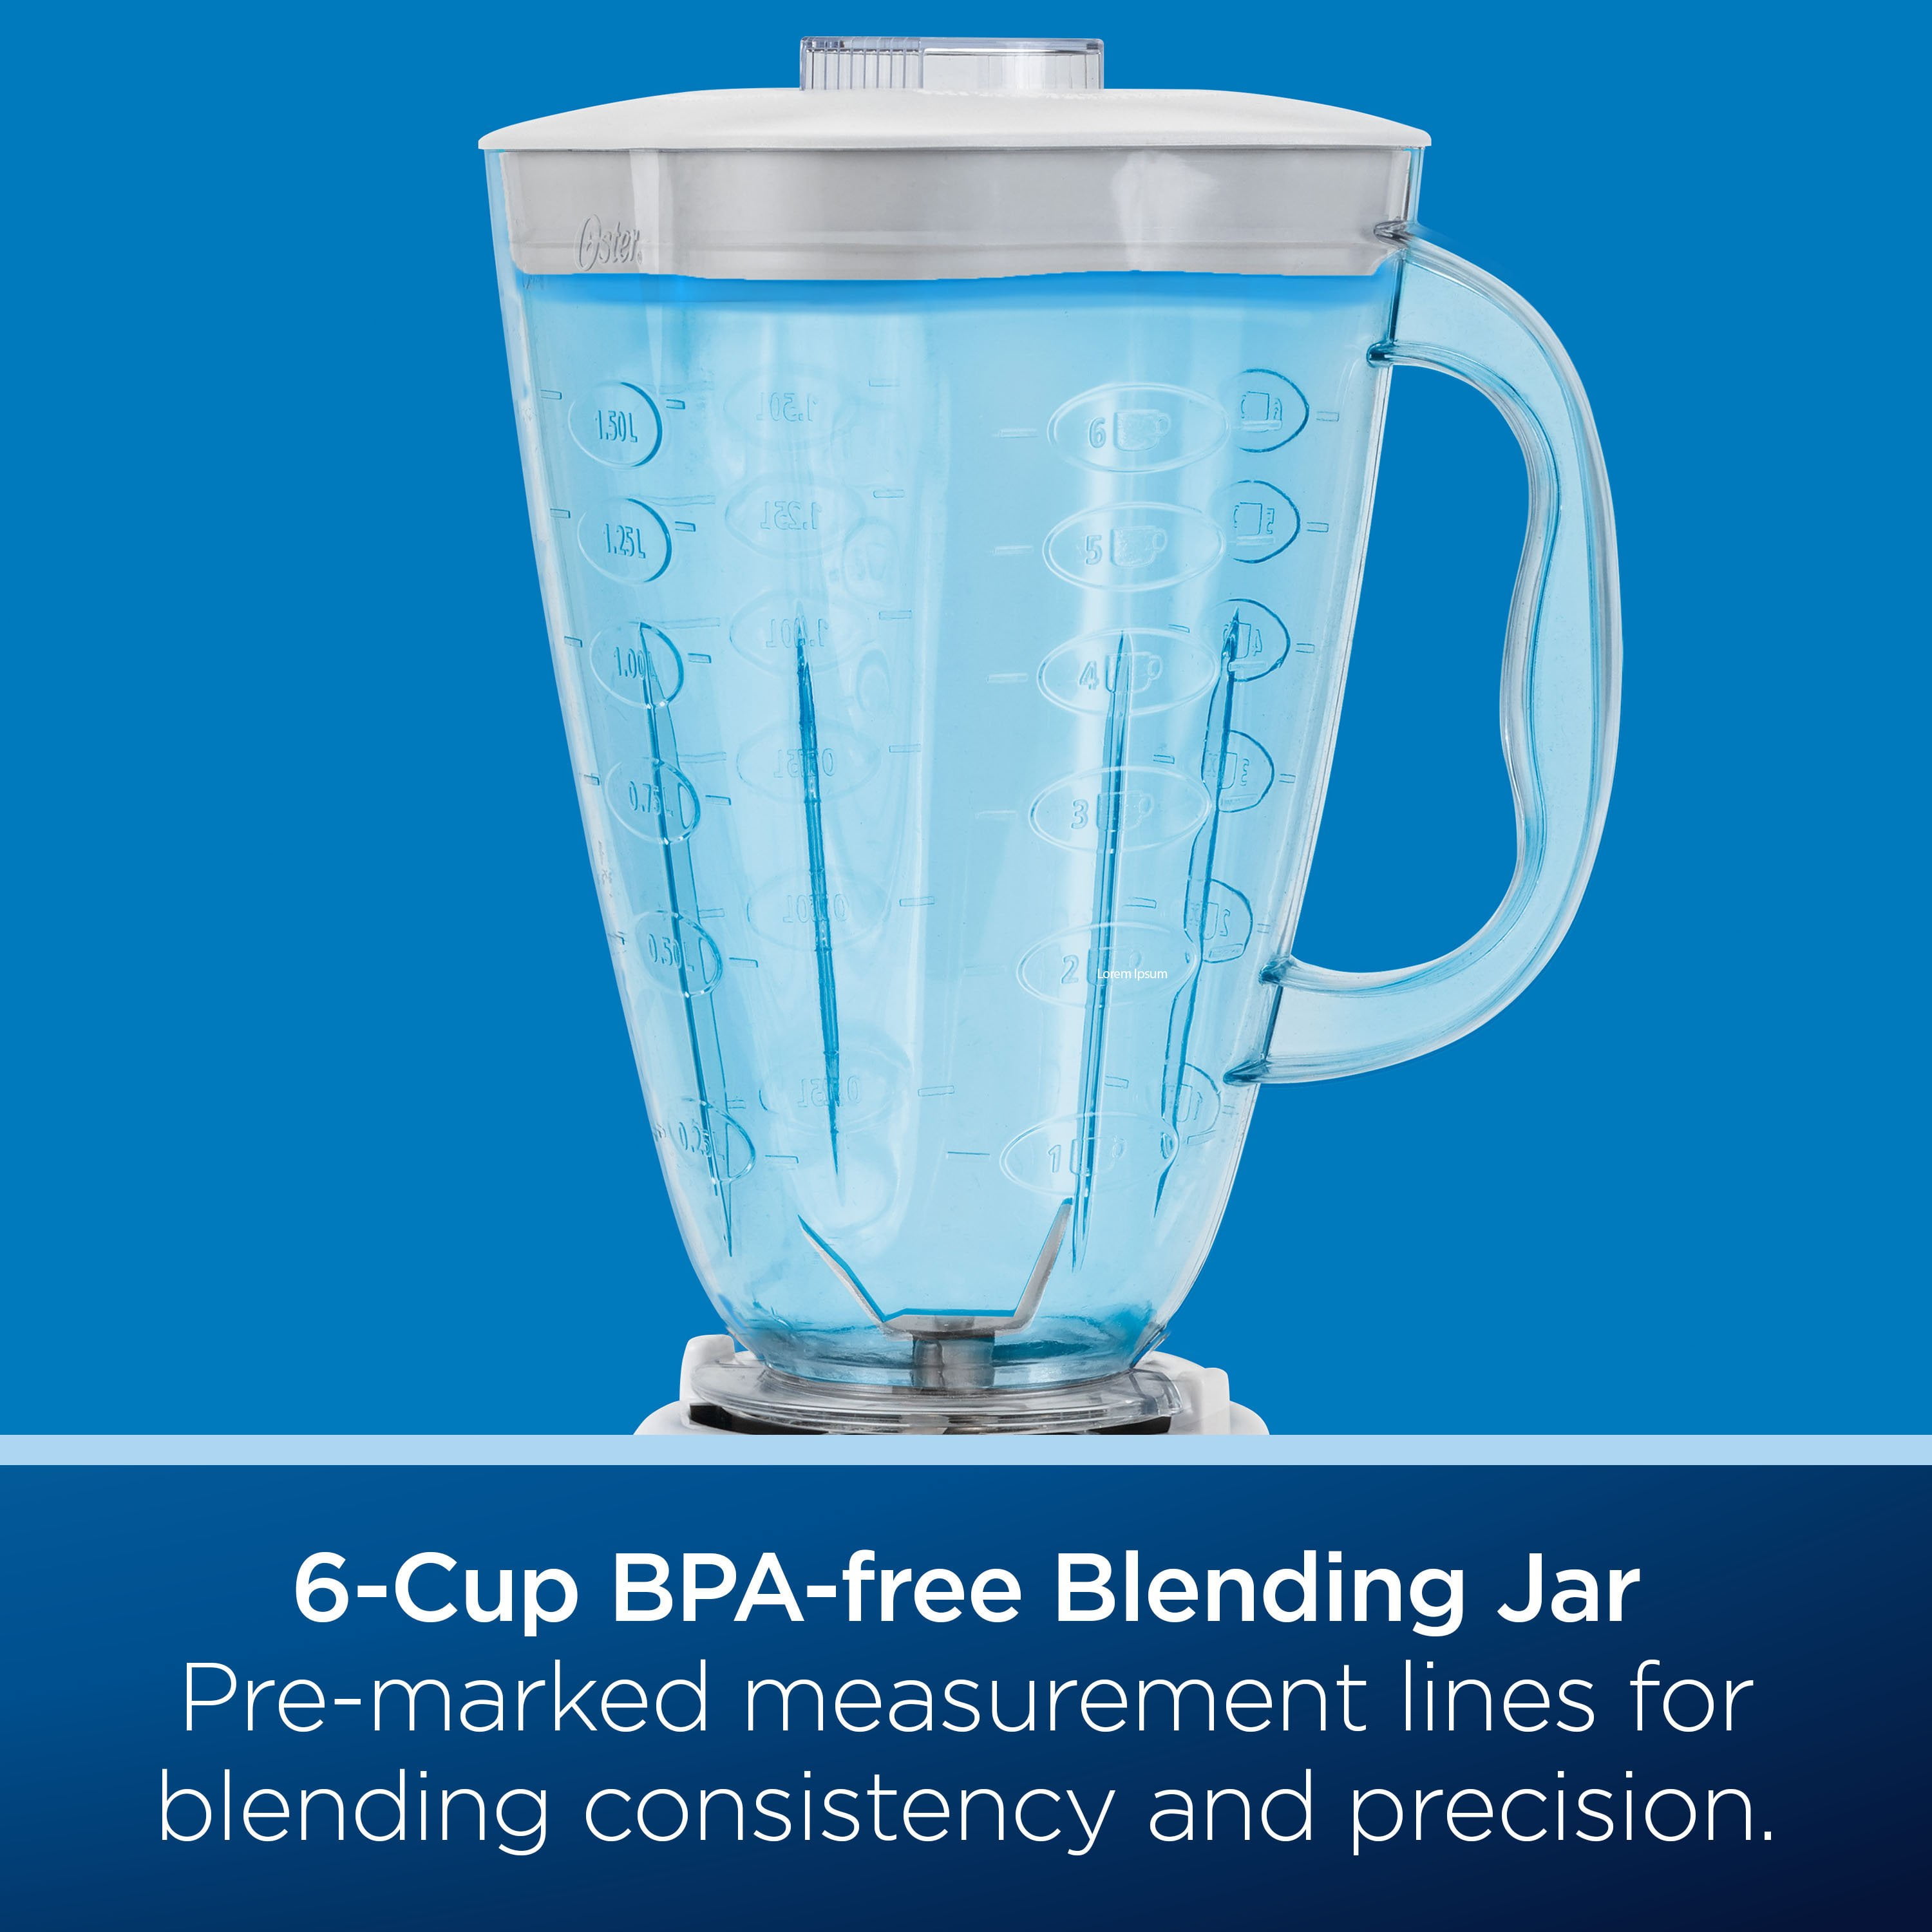 Oster® Classic Series Blender with BPA-Free Plastic Jar, Black